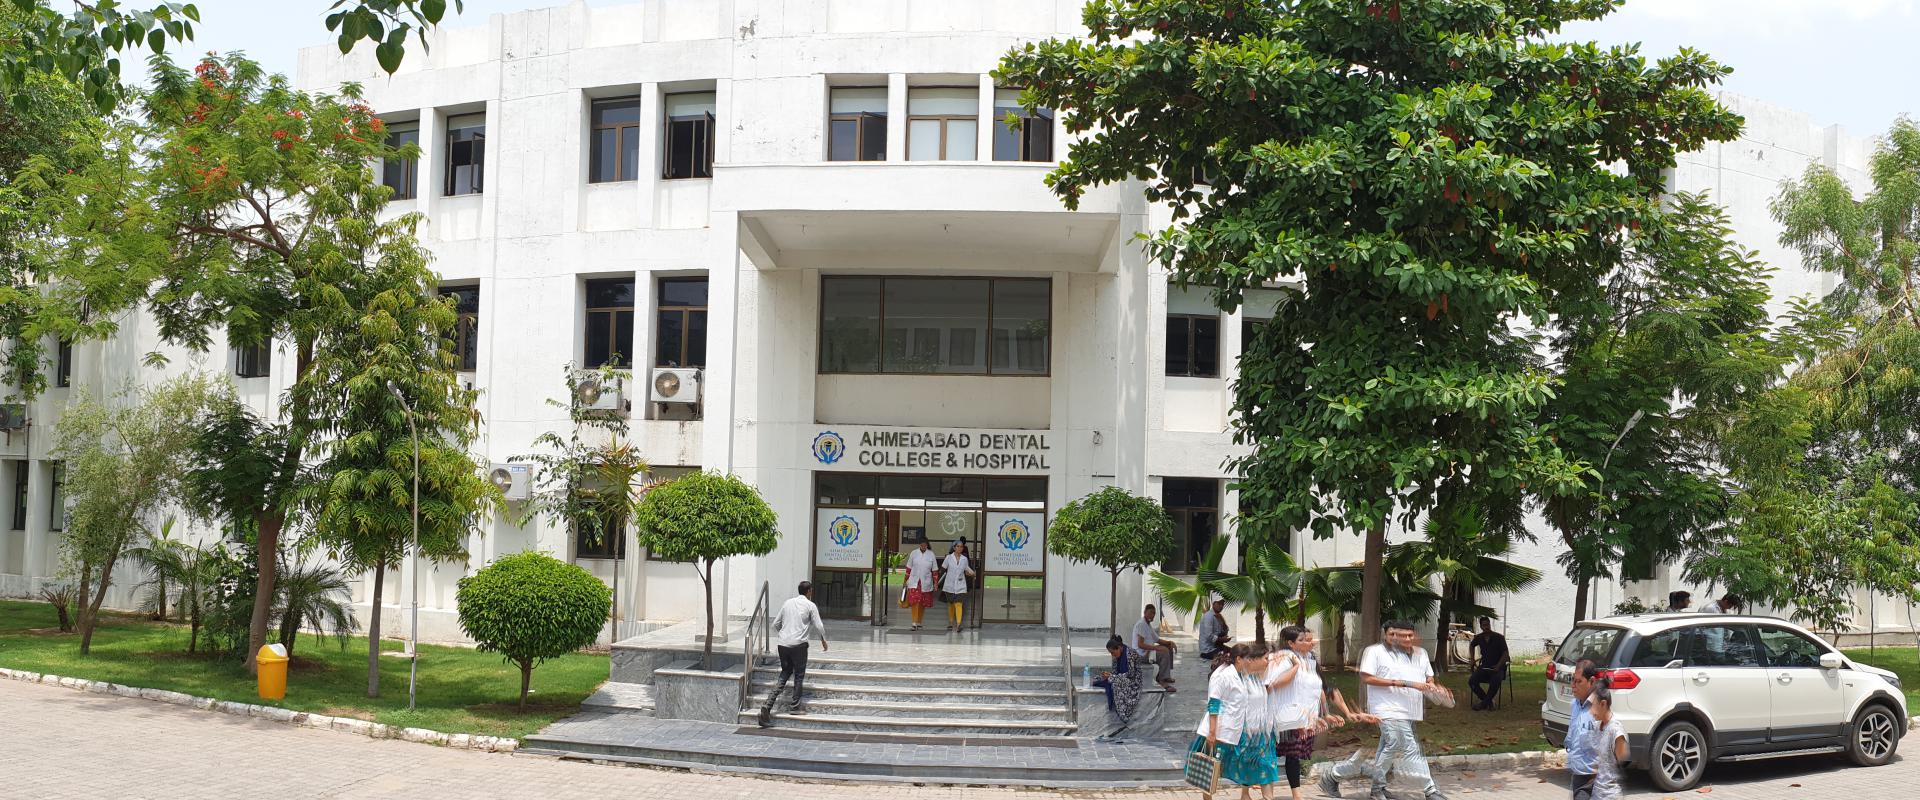 Ahmedabad Dental College Gandhinagar Admission, Courses, Fees, Facilities